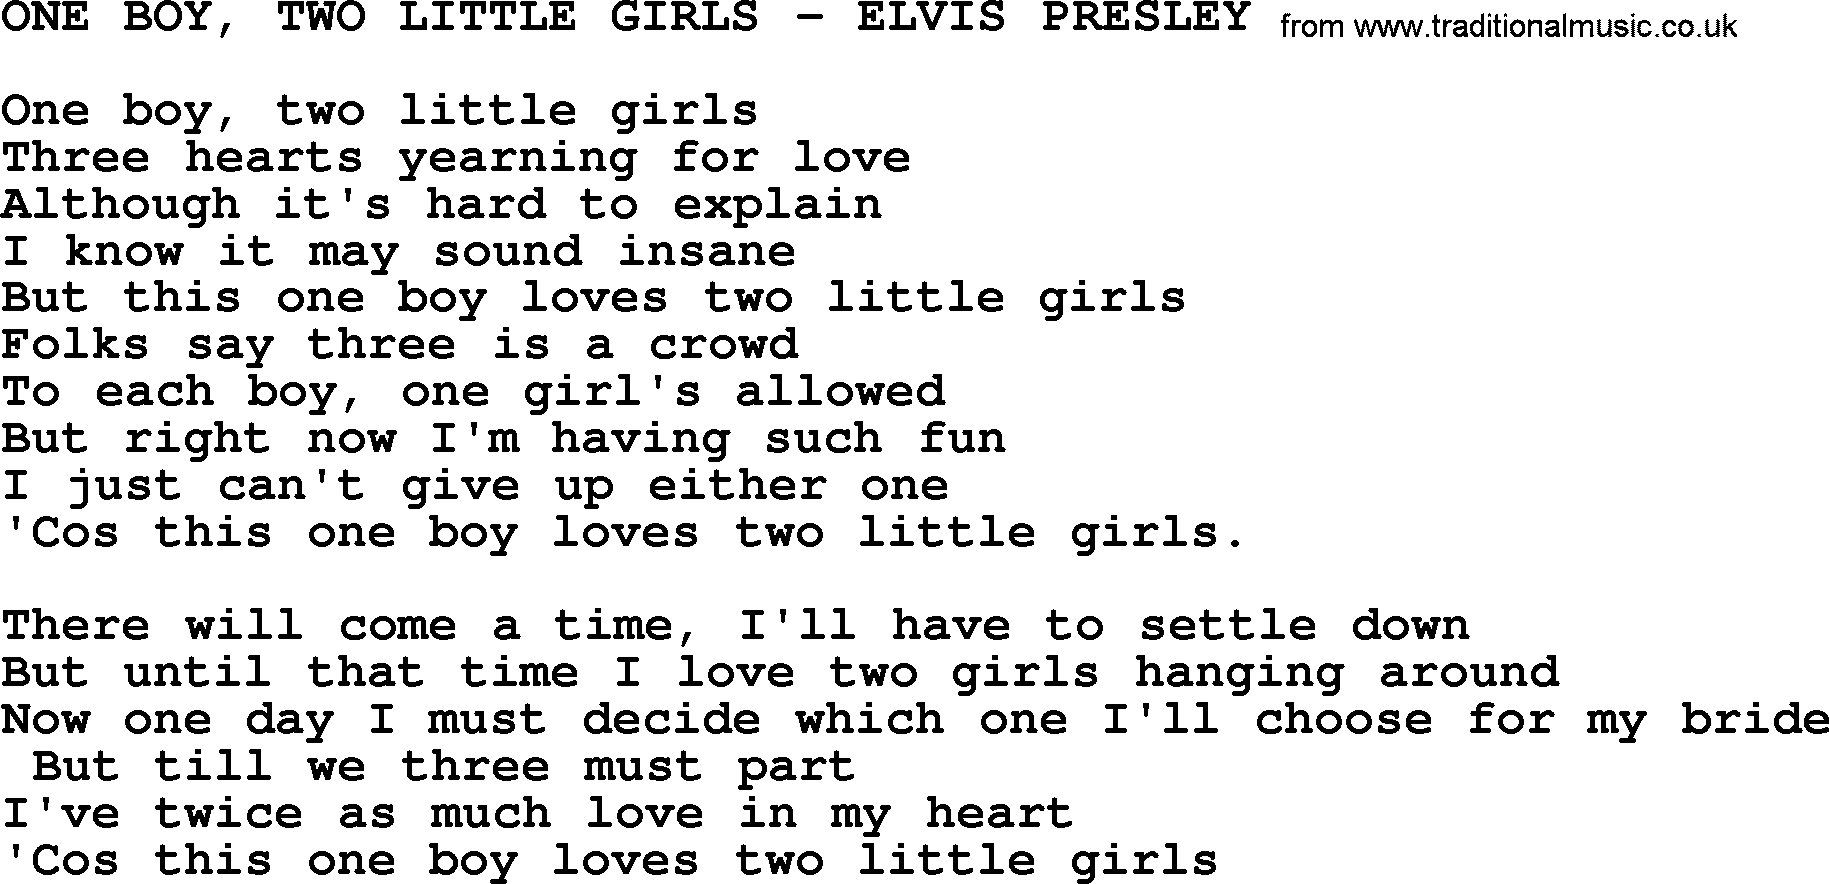 Elvis Presley song: One Boy, Two Little Girls-Elvis Presley-.txt lyrics and chords